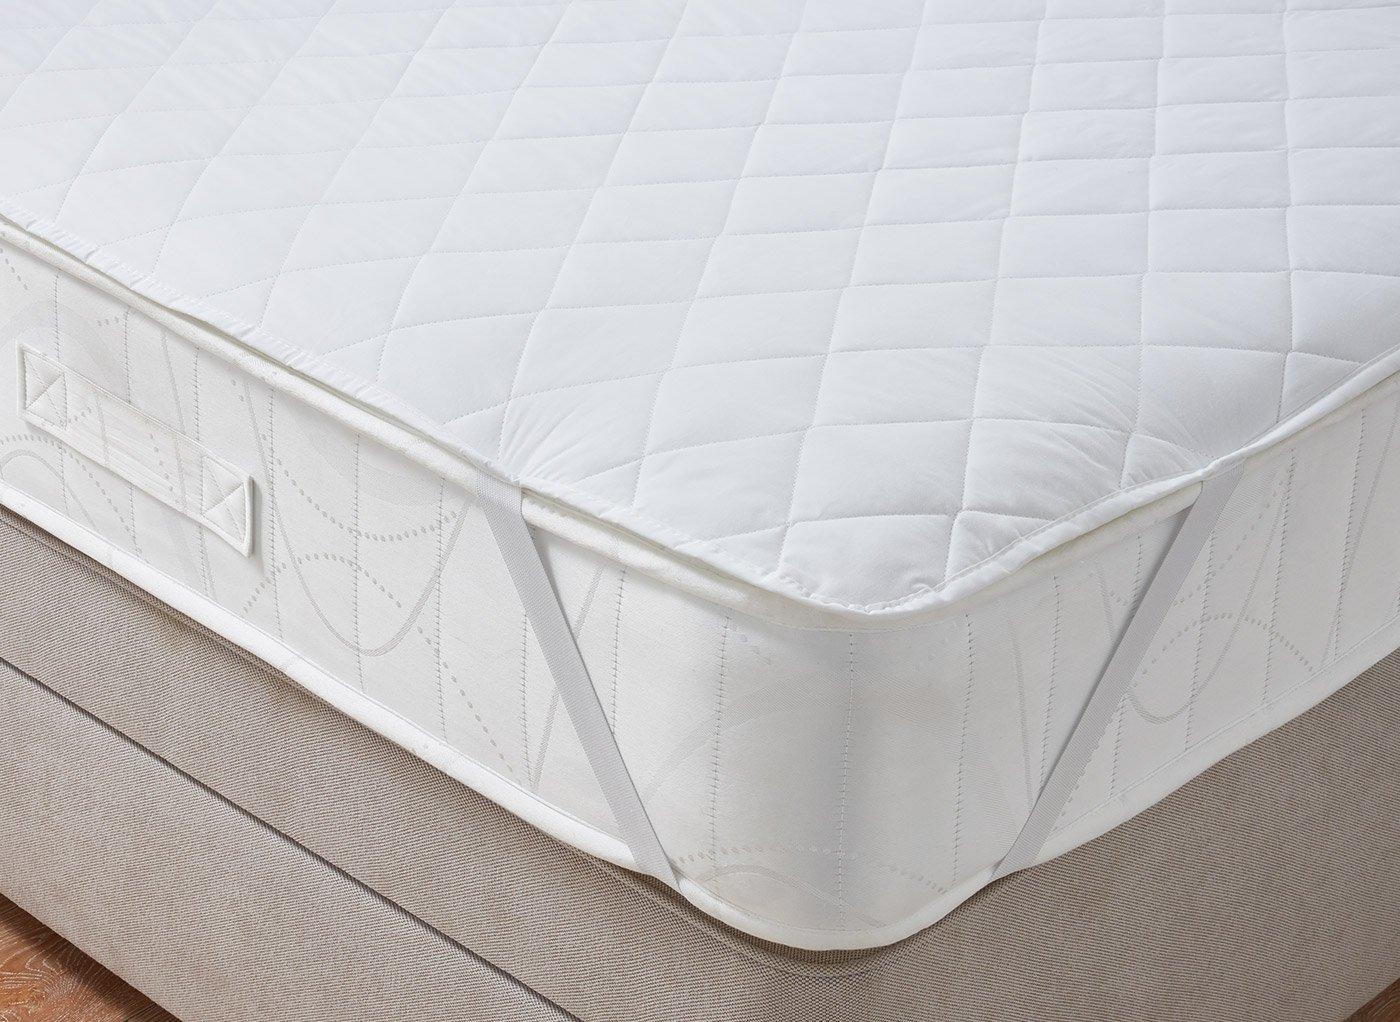 #2 Use Sleep Ez roma mattress with protector